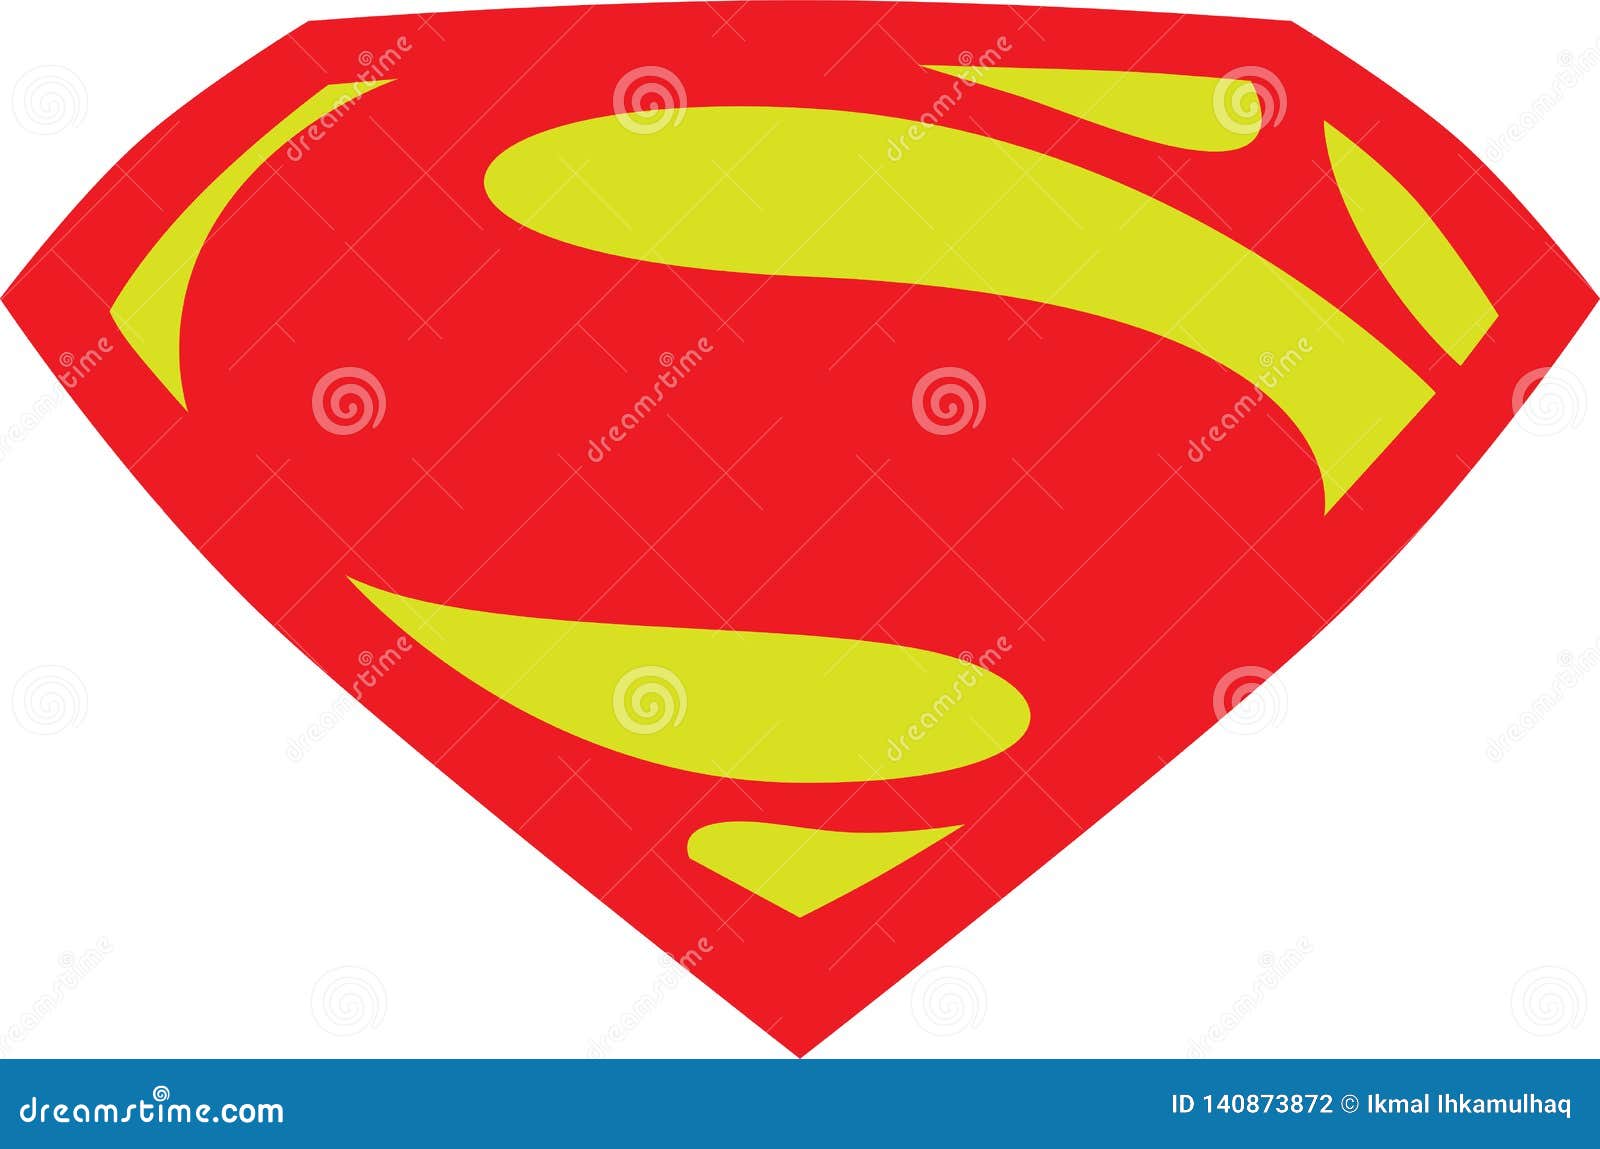 Superman New Logo Editorial Photography. Illustration Of Hulk - 140873872